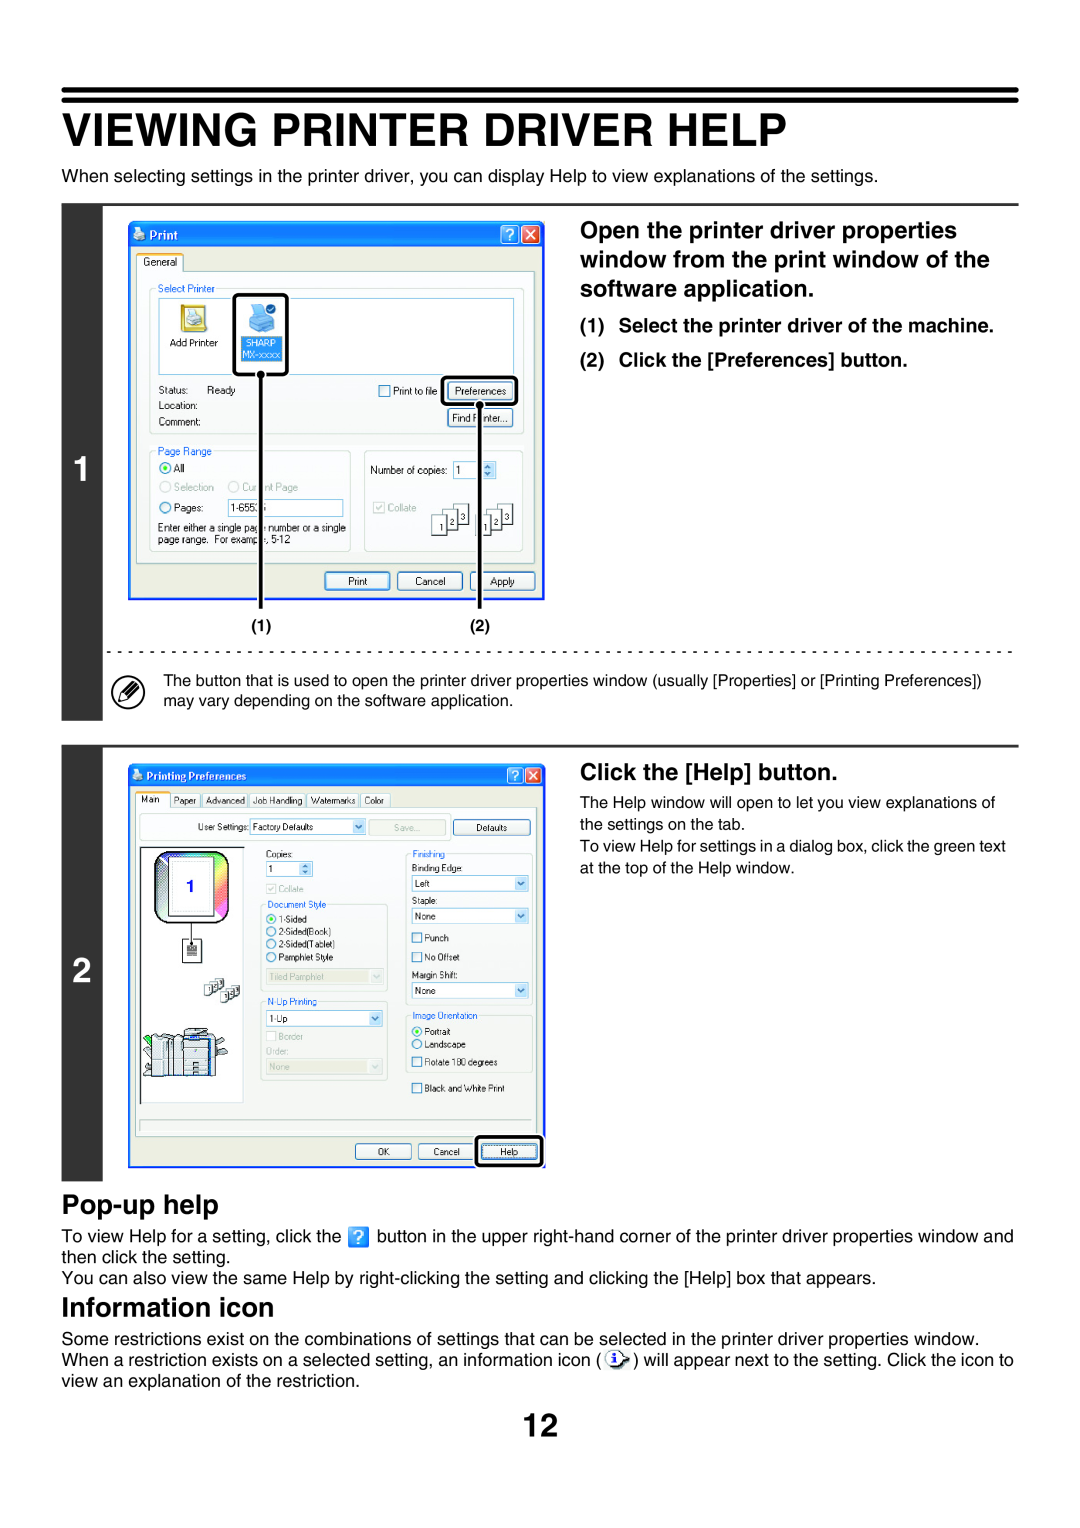 Sharp MX-6200N, MX-7000N, MX-5500N manual Viewing Printer Driver Help, Pop-up help, Information icon, Click the Help button 